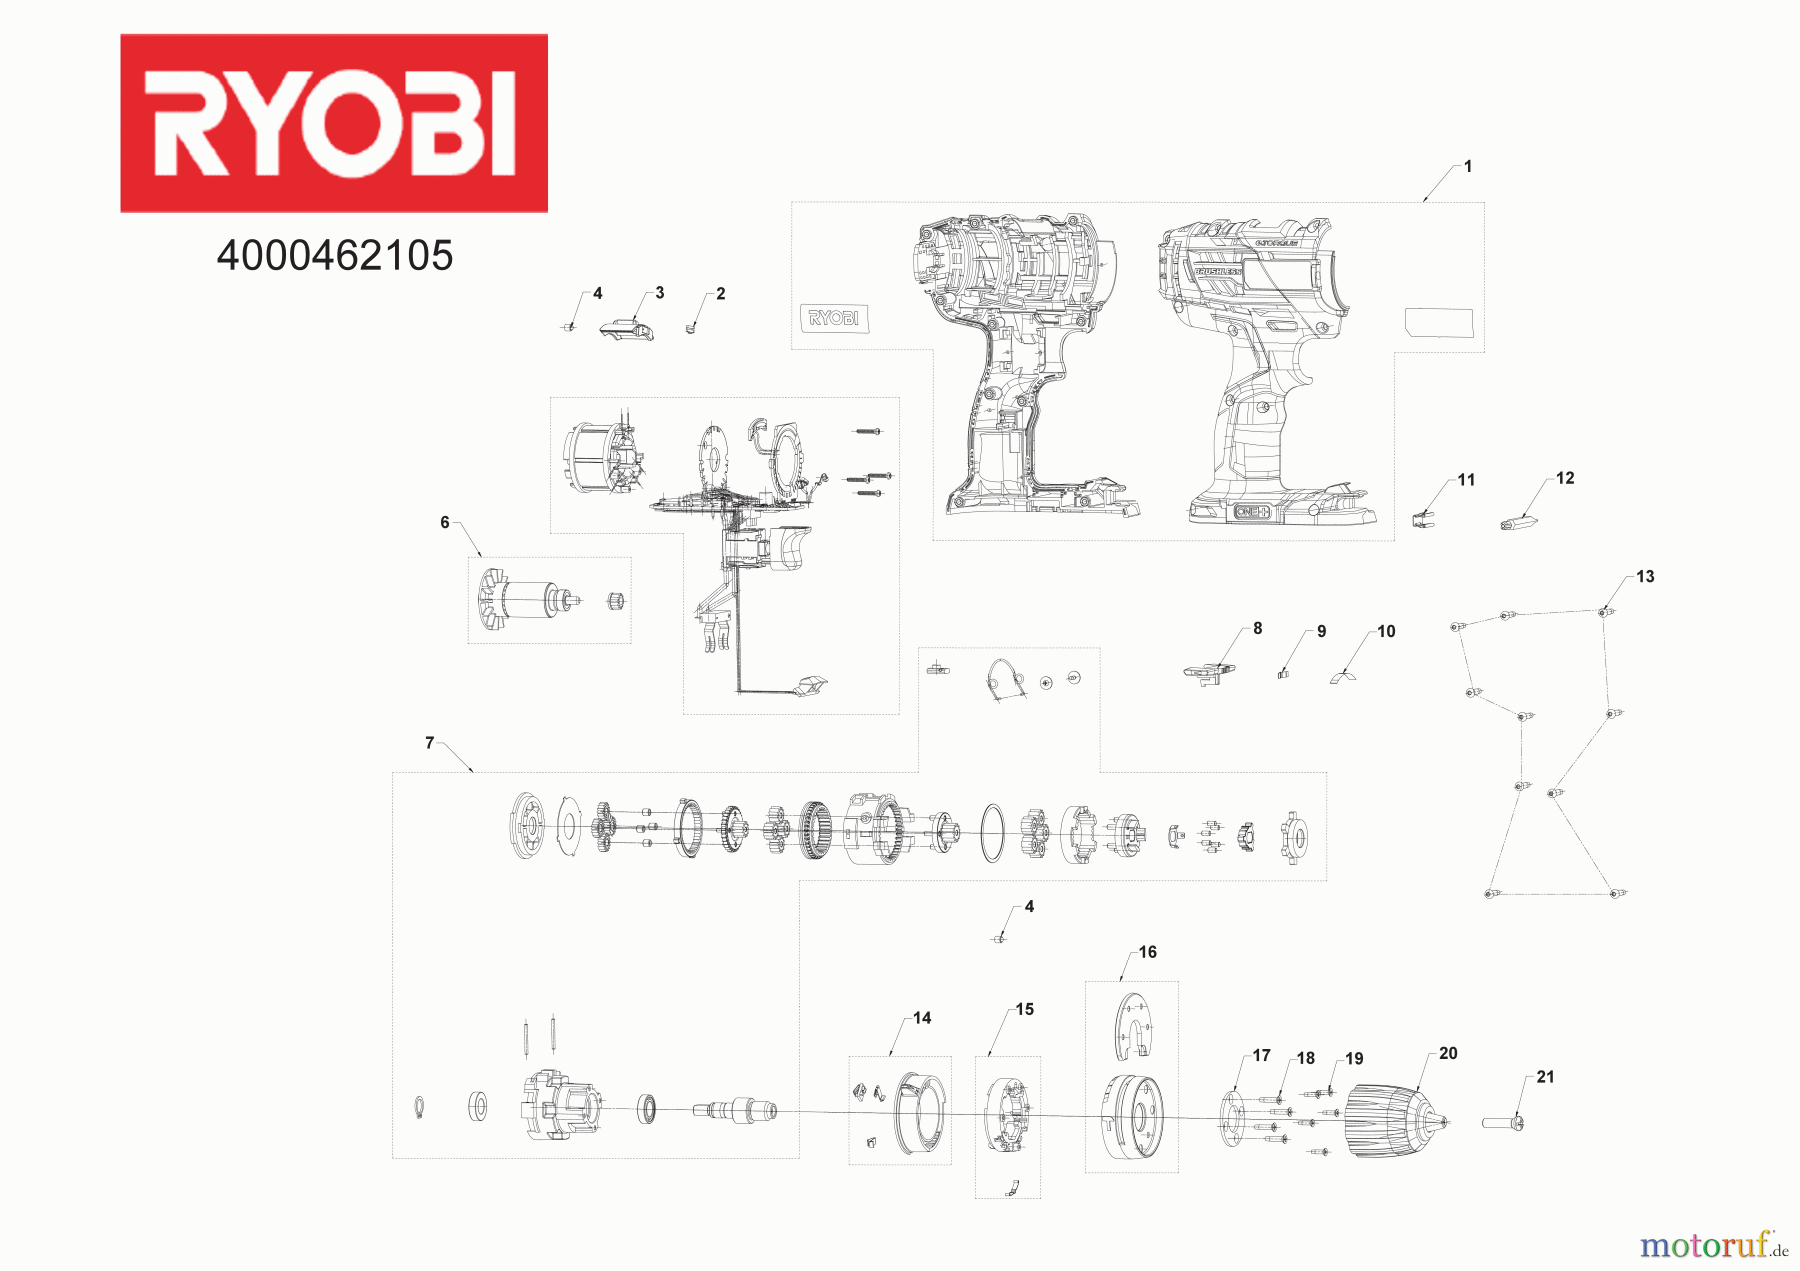  Ryobi (Schlag-)Bohrschrauber Akkuschrauber R18DDBL-0 18 V Brushless Akku-Bohrschraube 4000462105  Seite 1